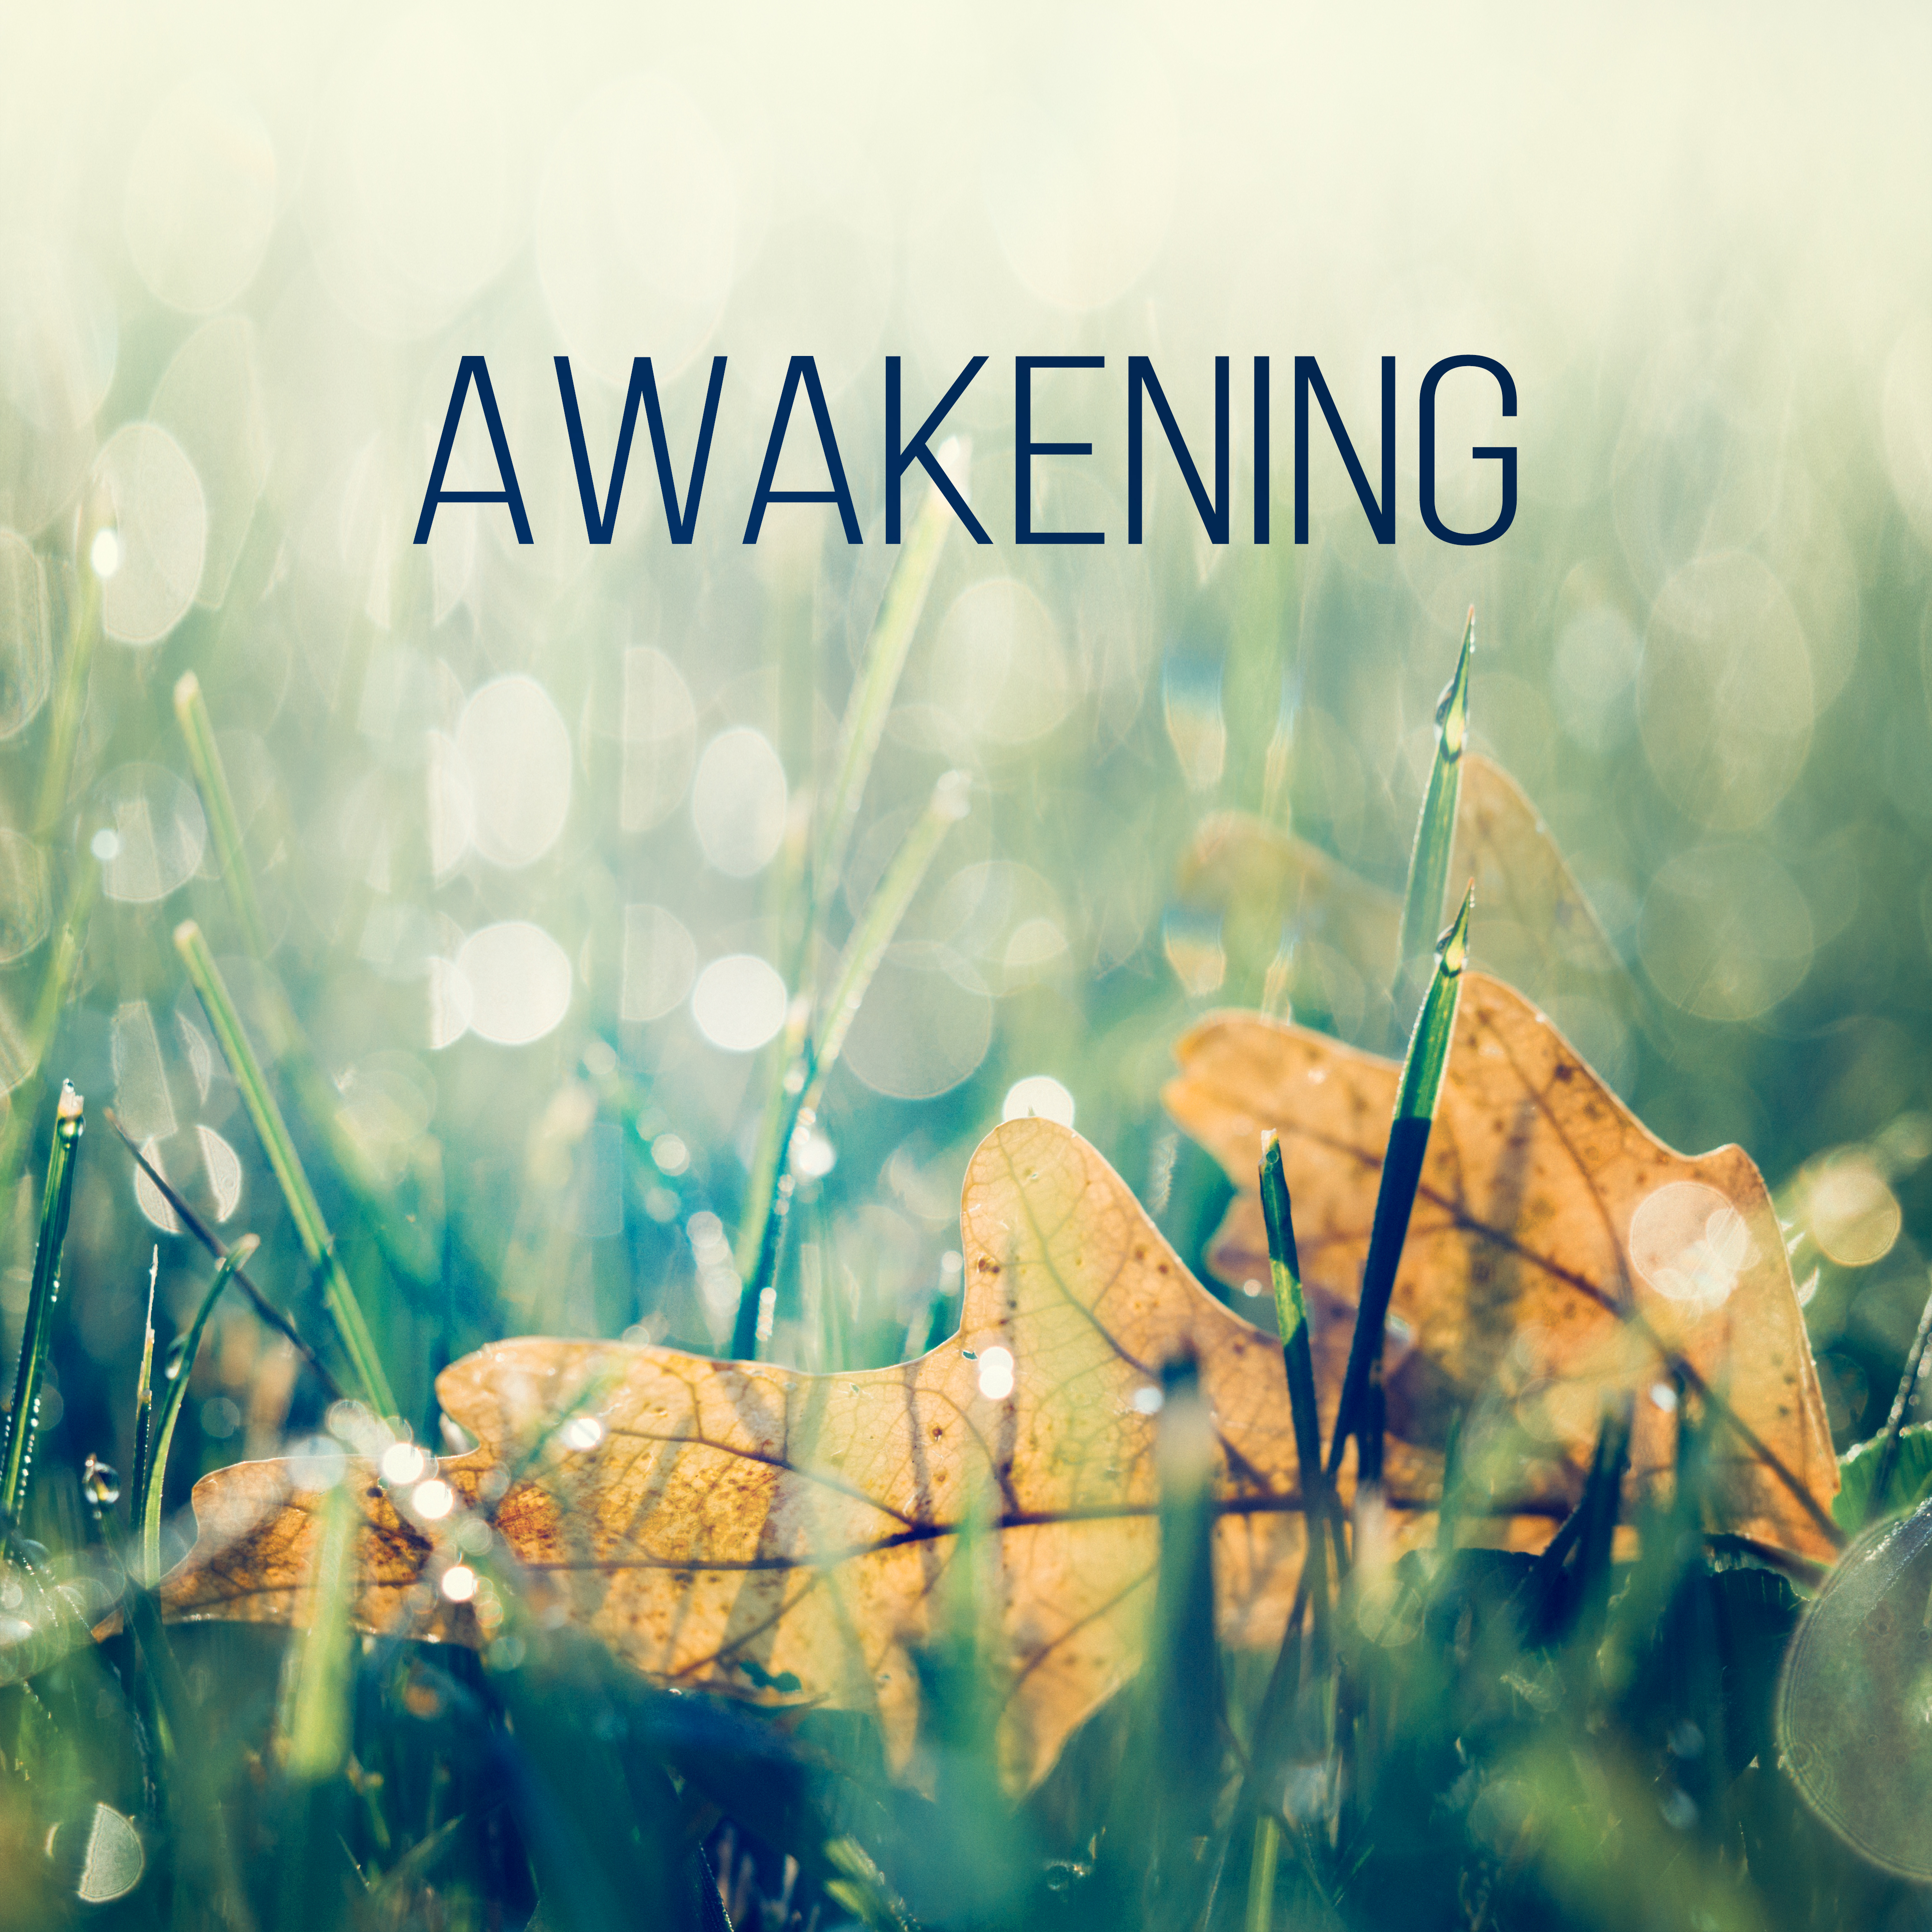 Awakening – Yoga Music, Surya Namaskar, Asana Positions, Meditation and Relaxation Music, Welness and SPA